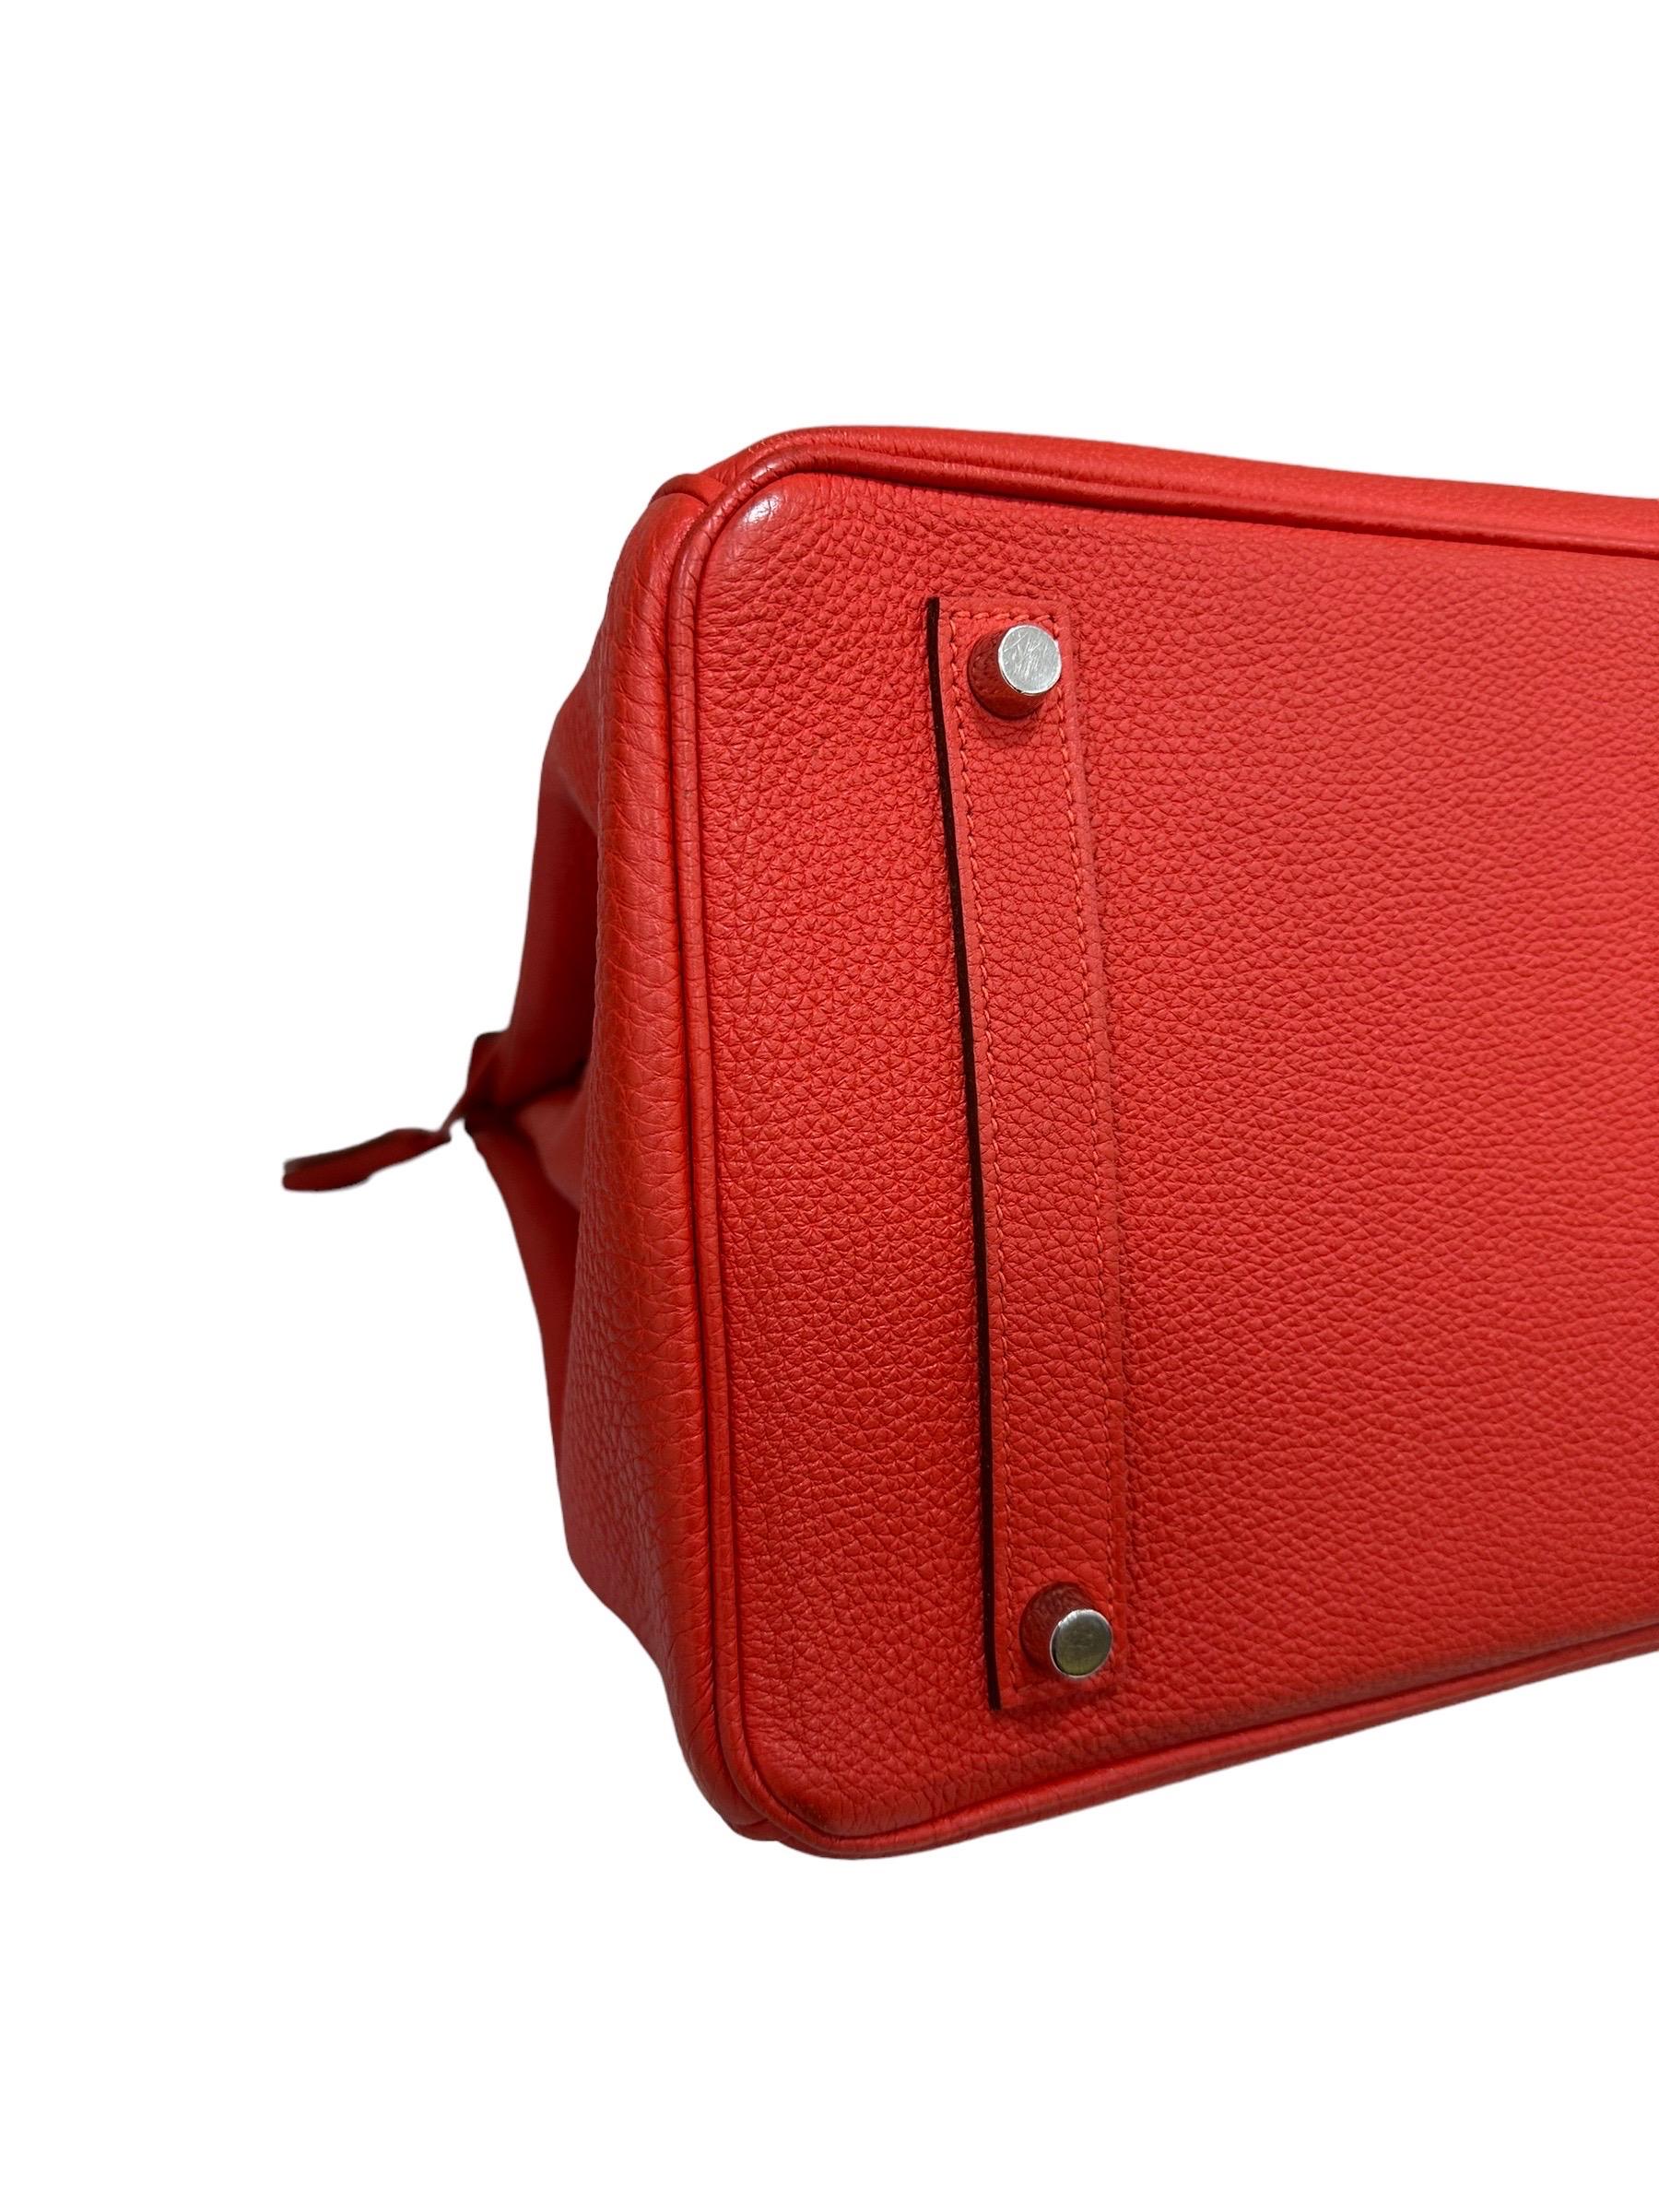 2011 Hermès Birkin 35 Togo Leather Rouge Capucine Top Handle Bag For Sale 7